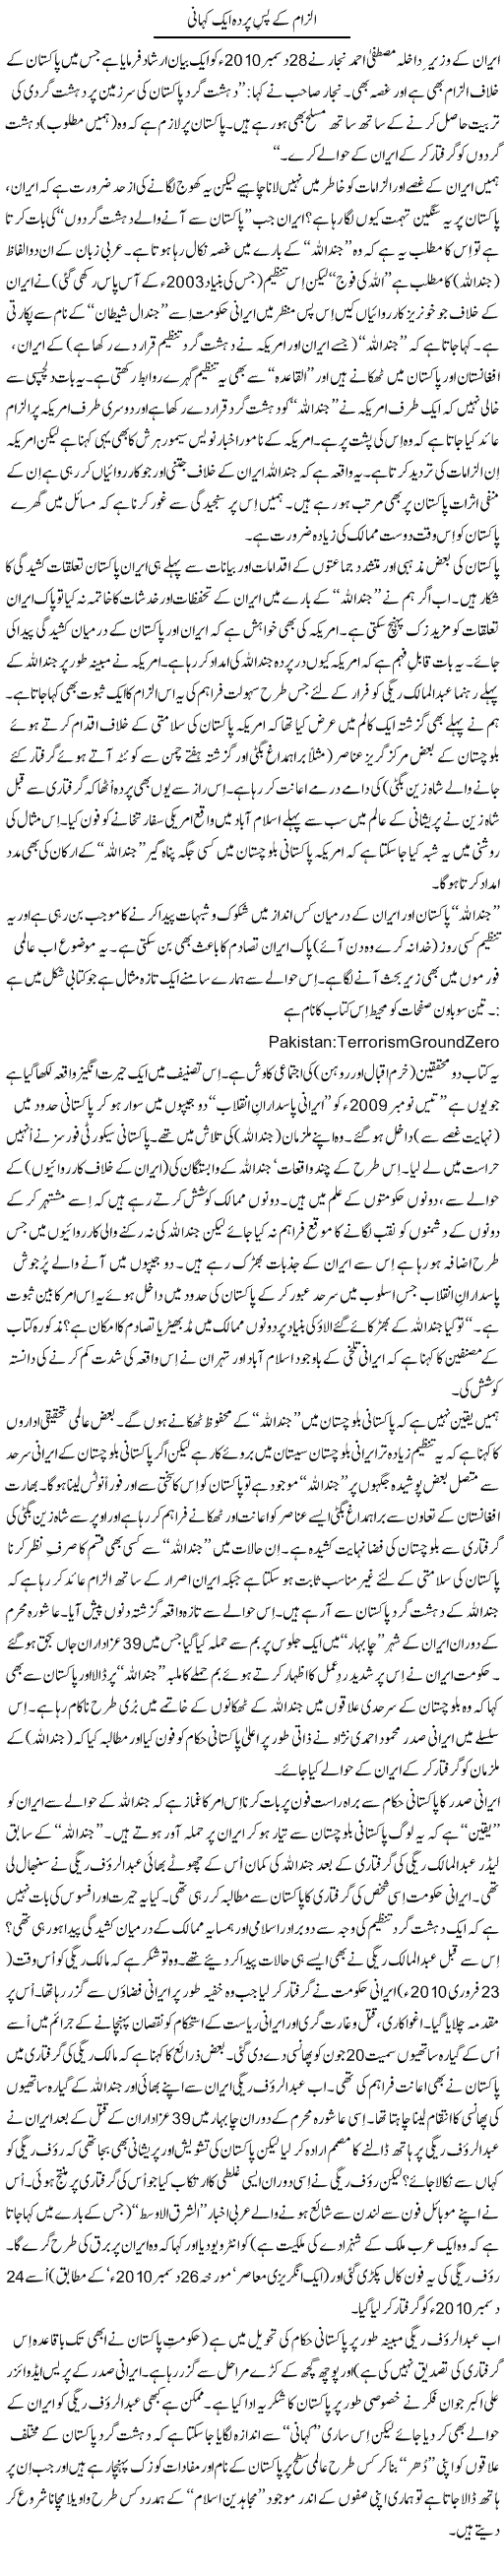 Allegations Story Express Column Tanvir Qasir 30 December 2010